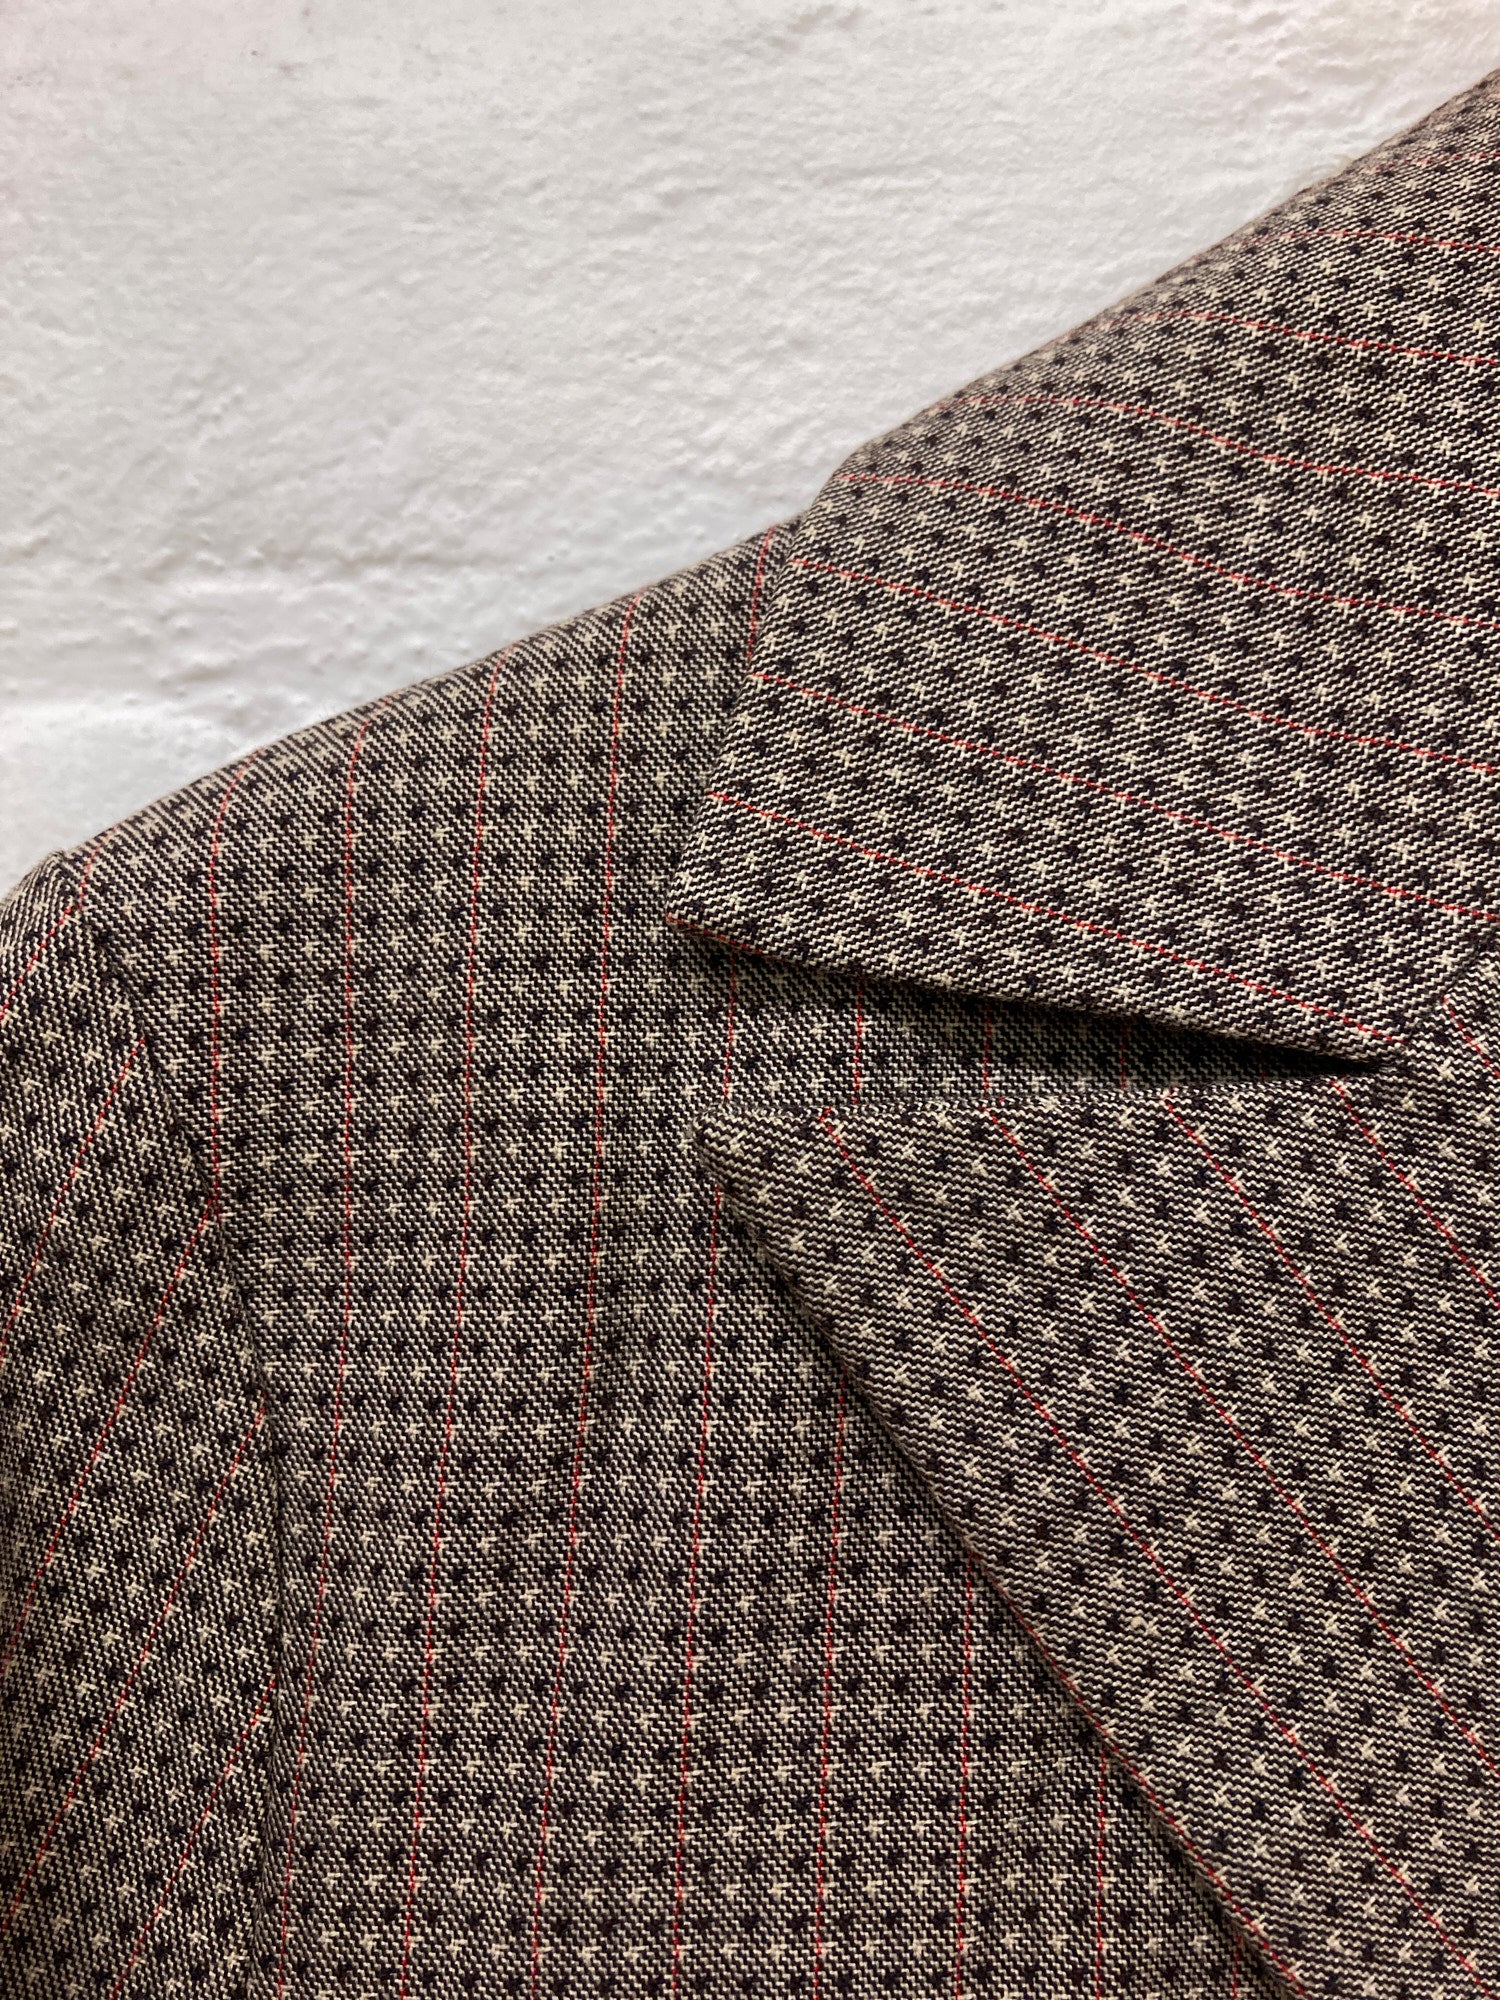 Limi Feu brown cotton patterned three button blazer - S